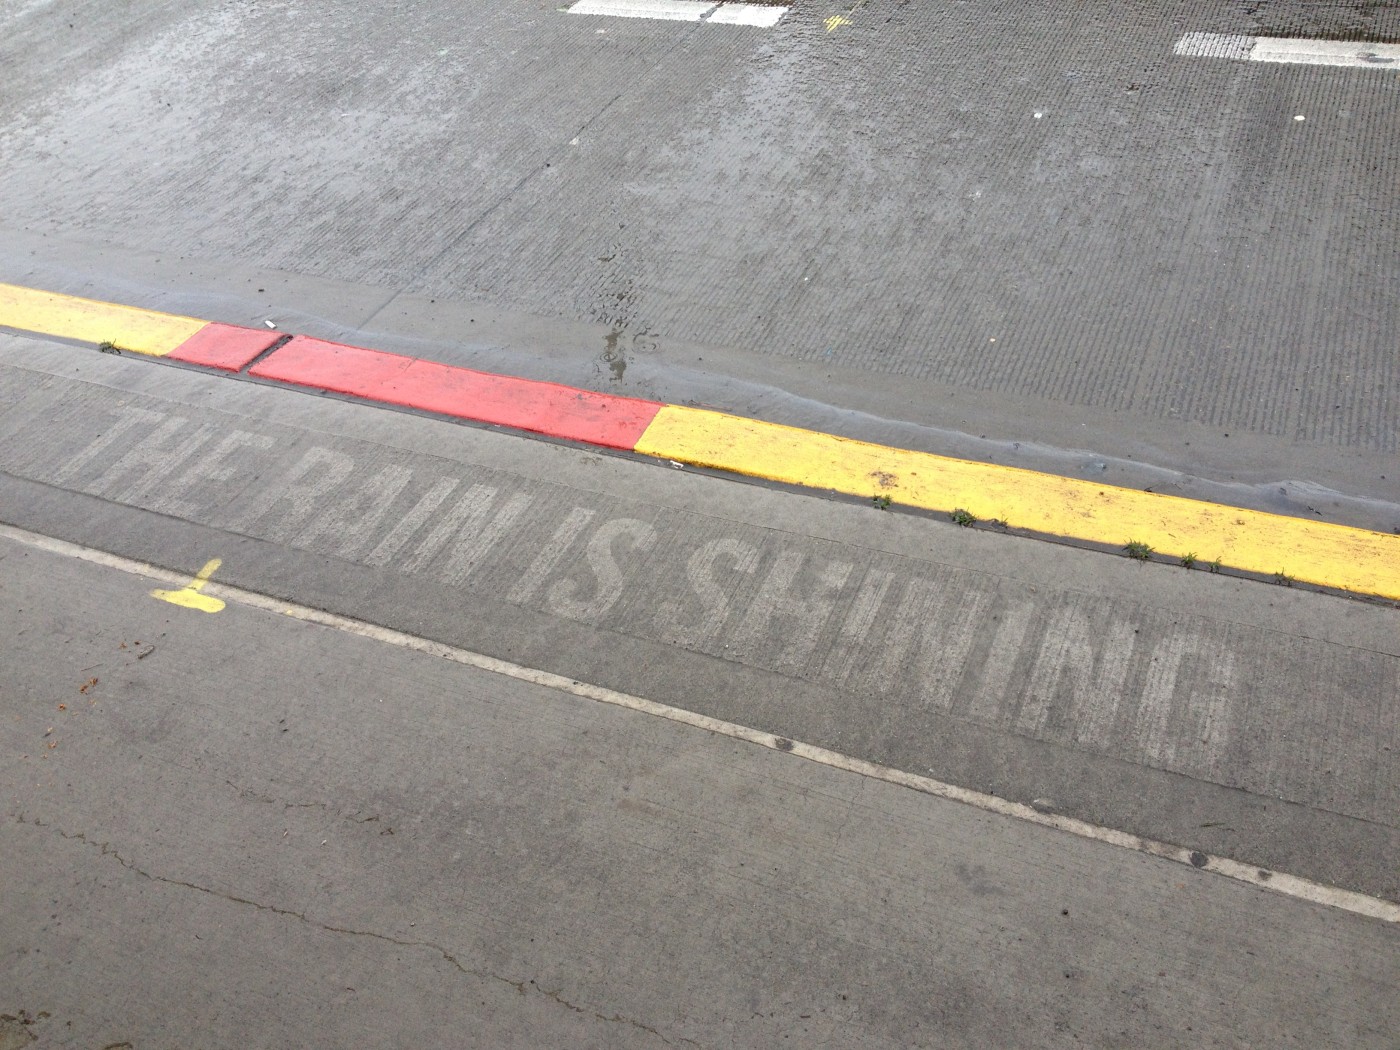 Illustrations on Sidewalks Appear When Raining_8